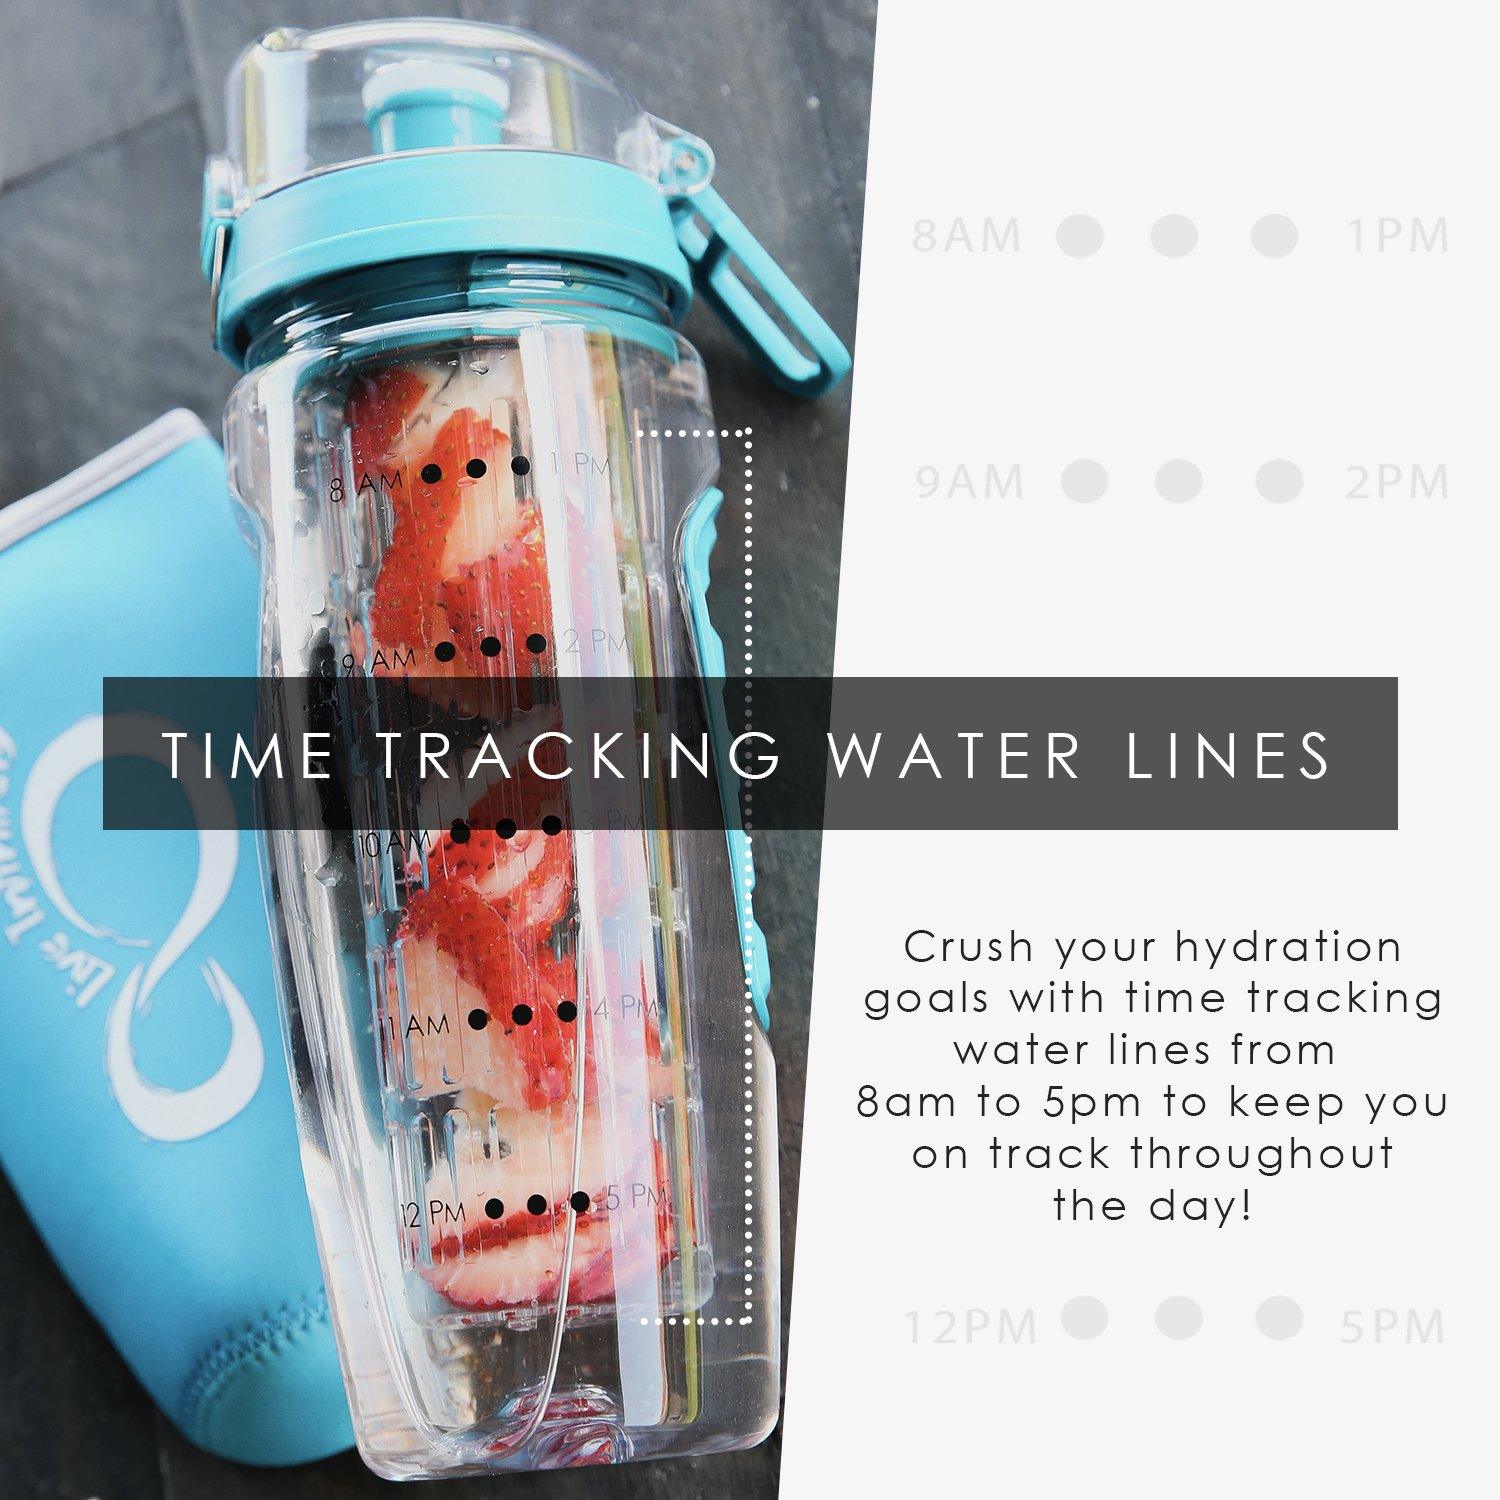 Live Infinitely 32 oz. Fruit Infuser Water